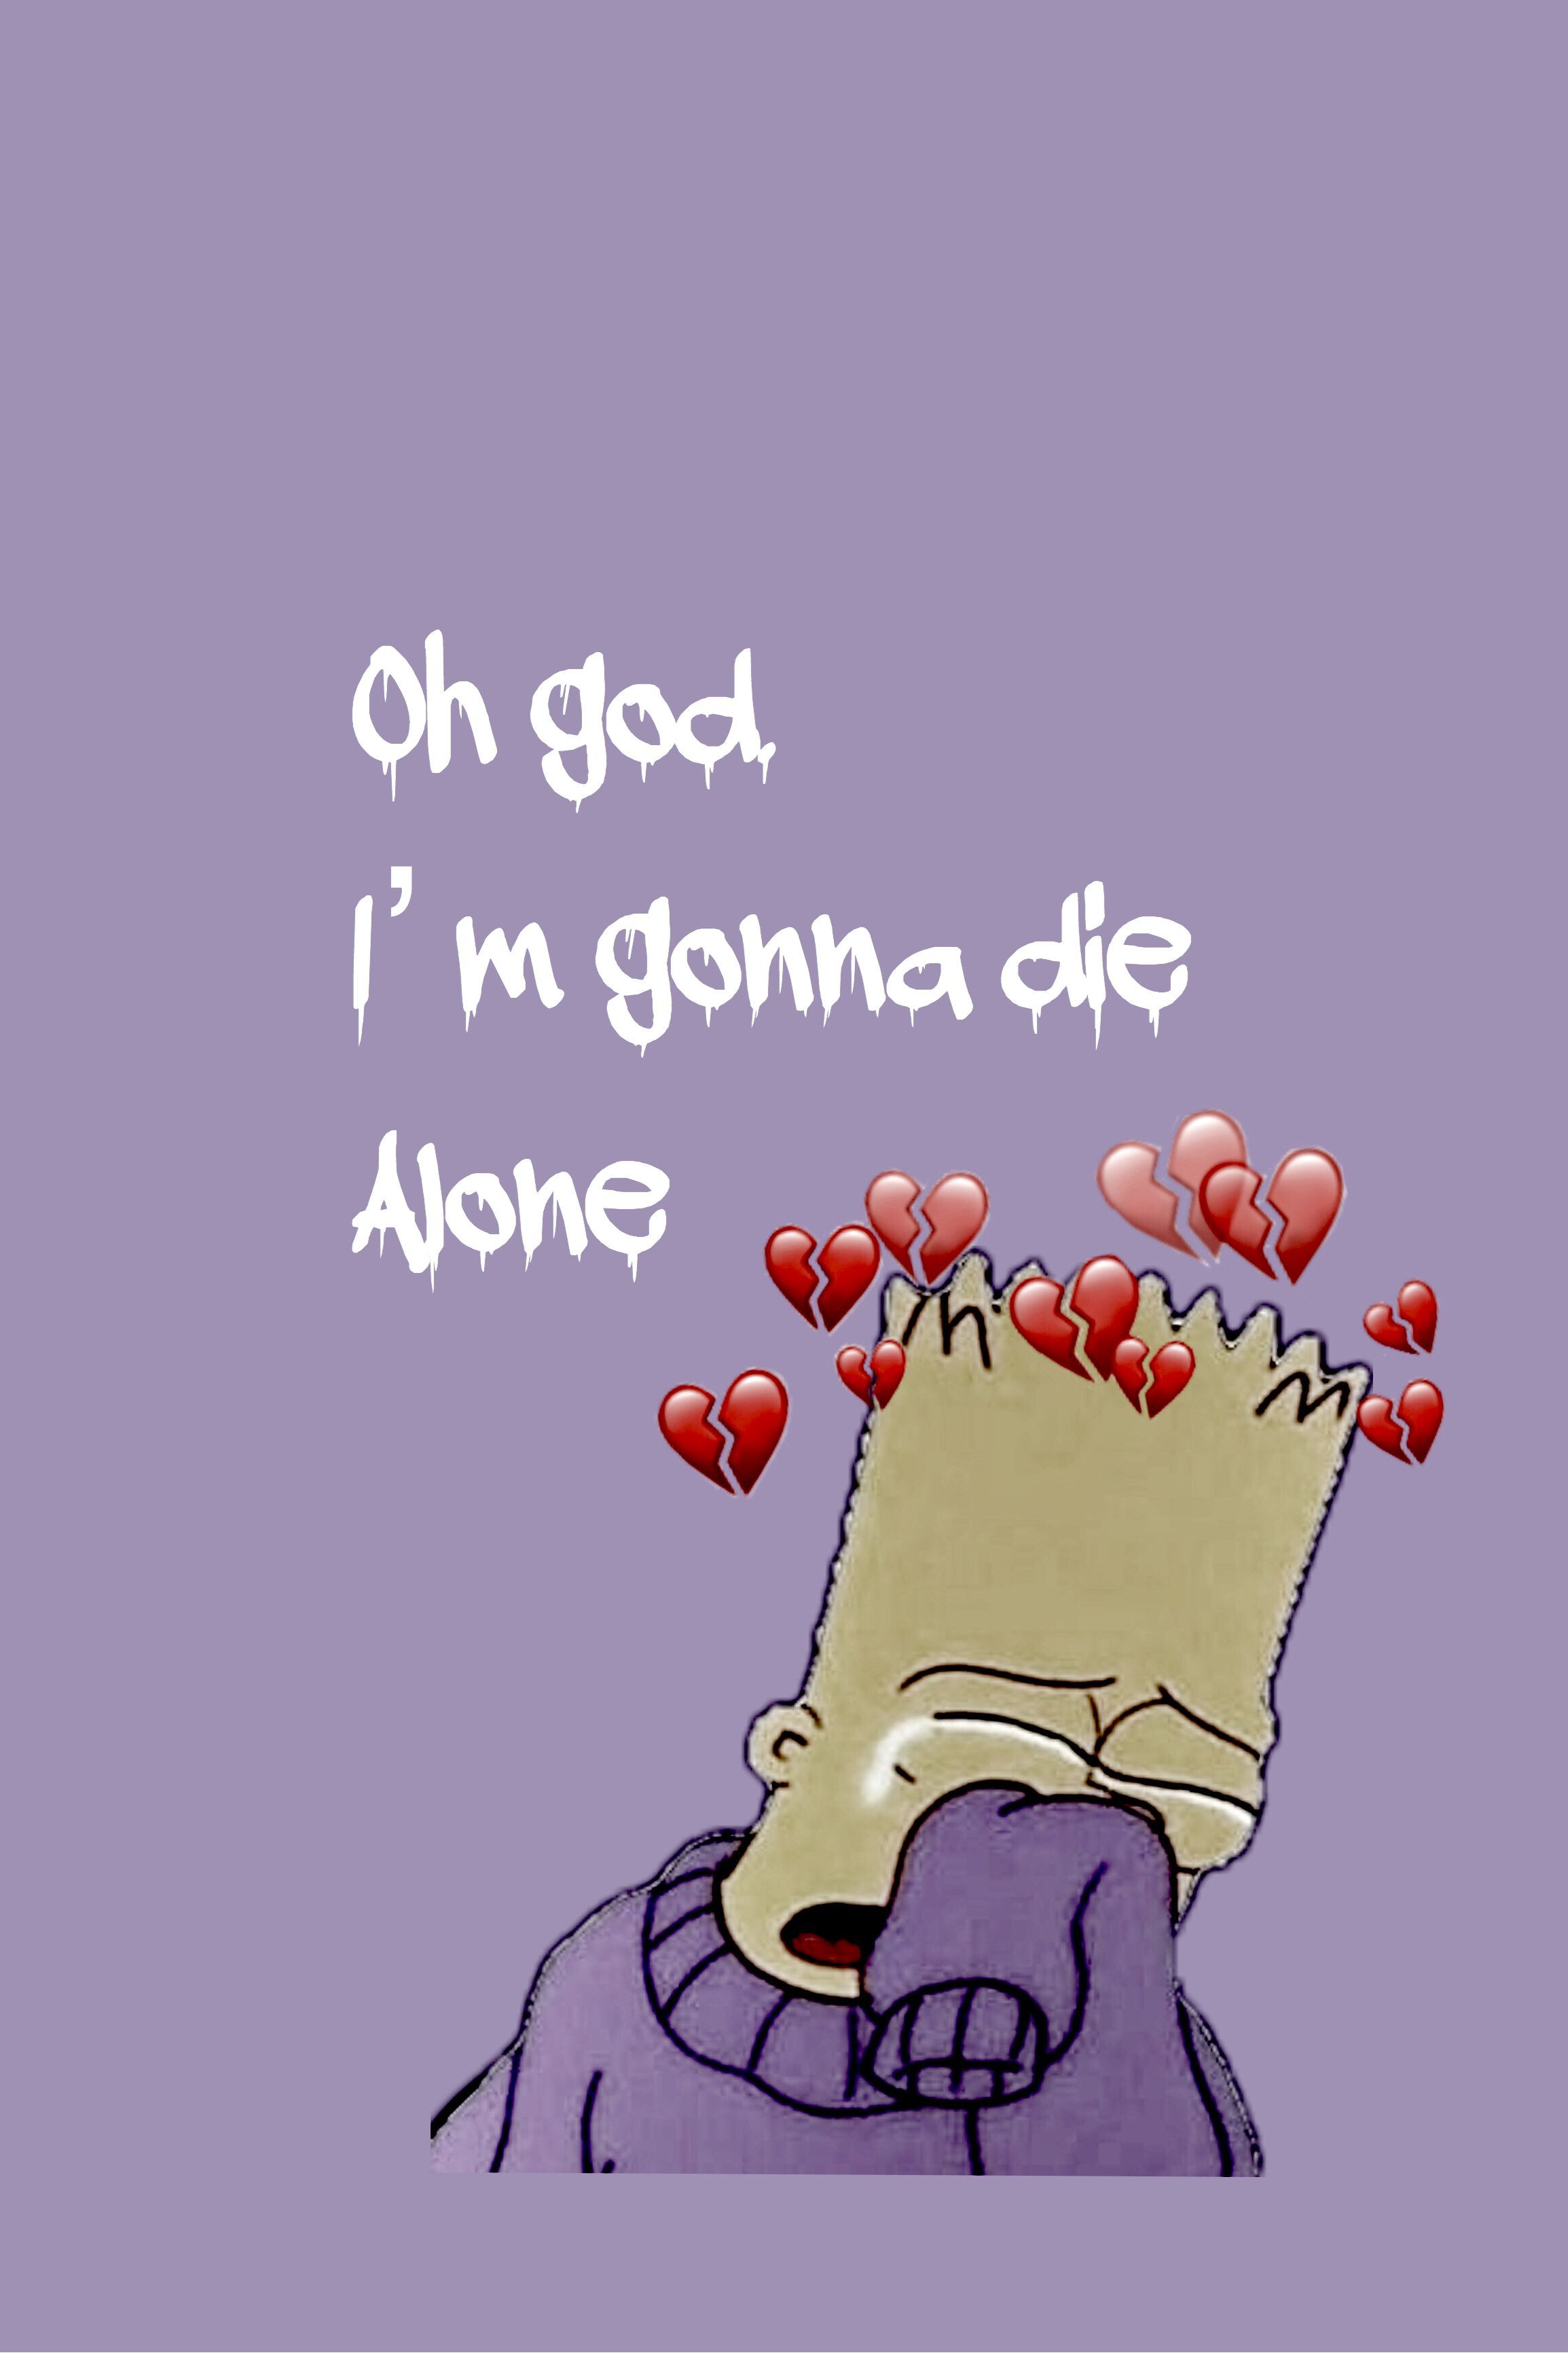 Depressed Bart Simpson Wallpaper